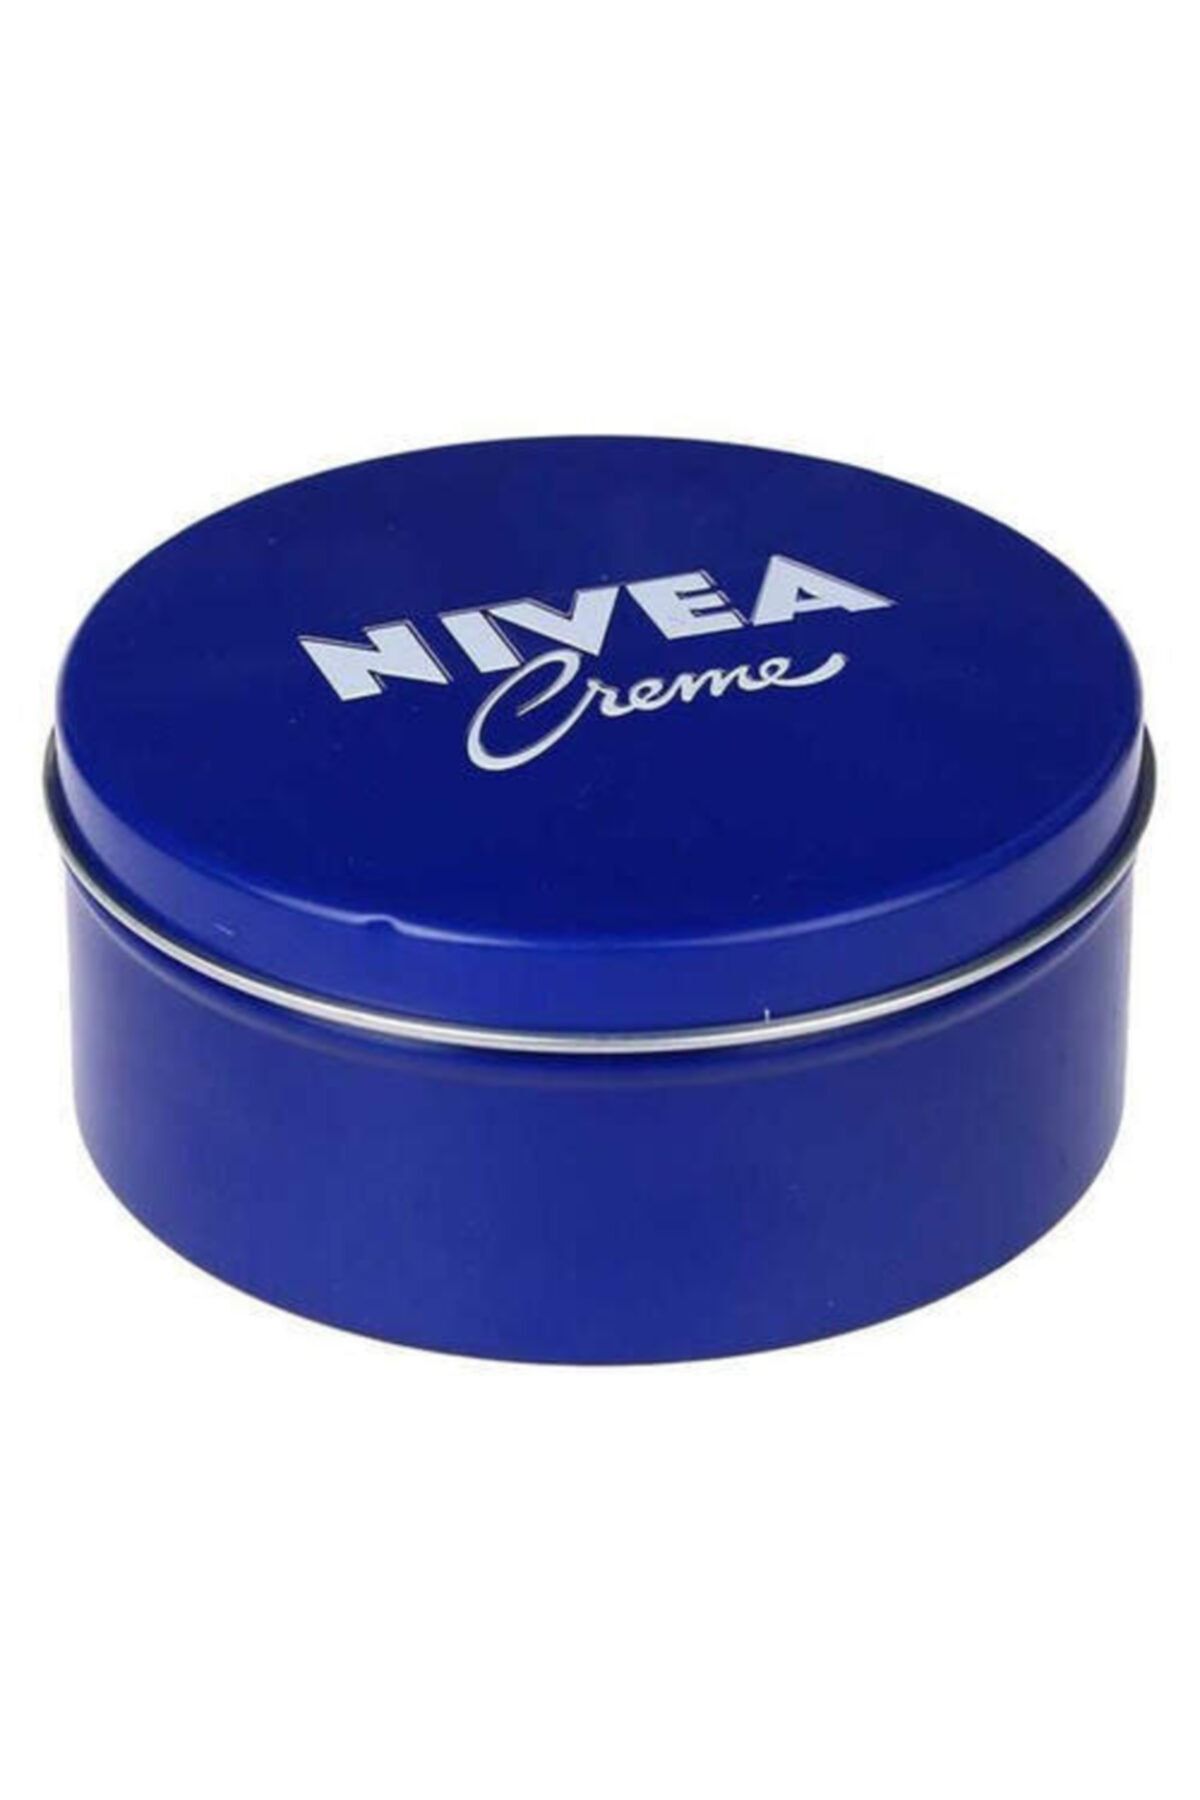 NIVEA Klasik El Kremi - Creme 250 Ml 4005800001253